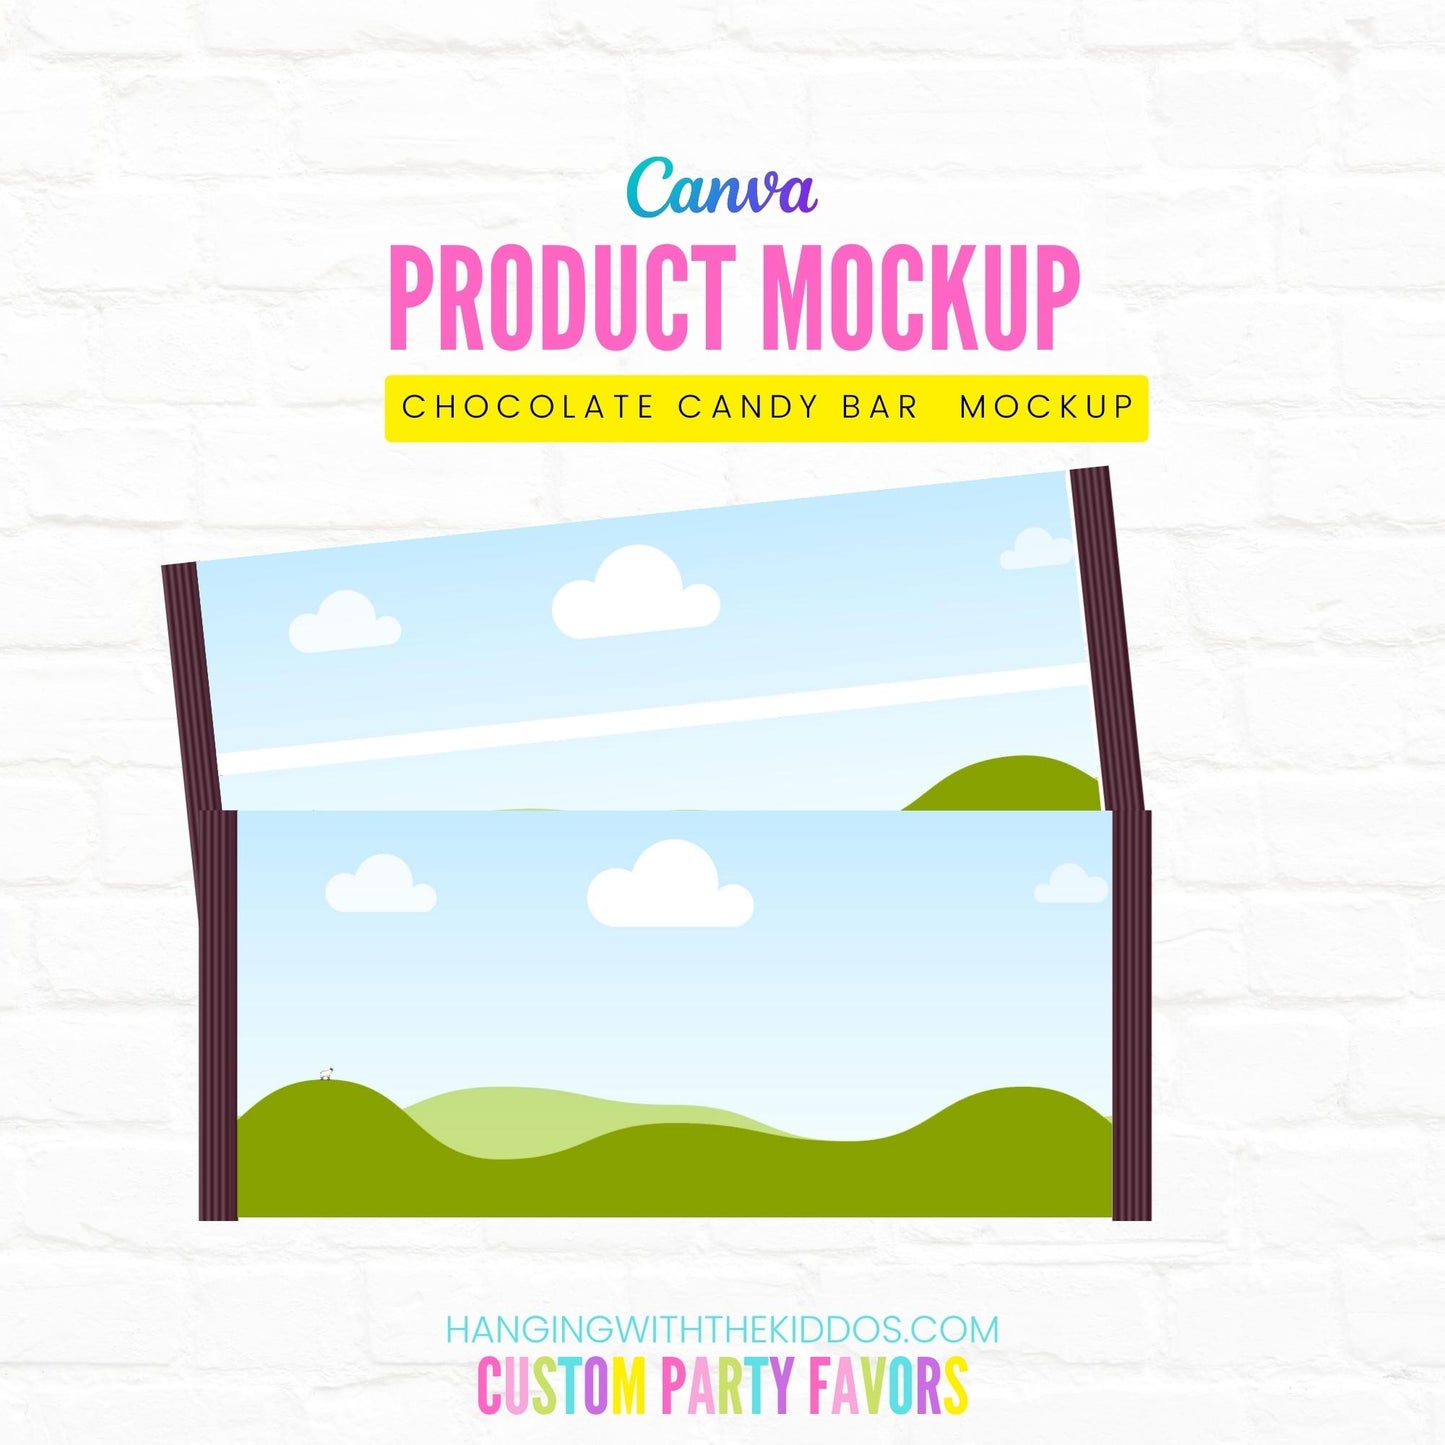 Chocolate Candy Bar Mockup|Canva Template